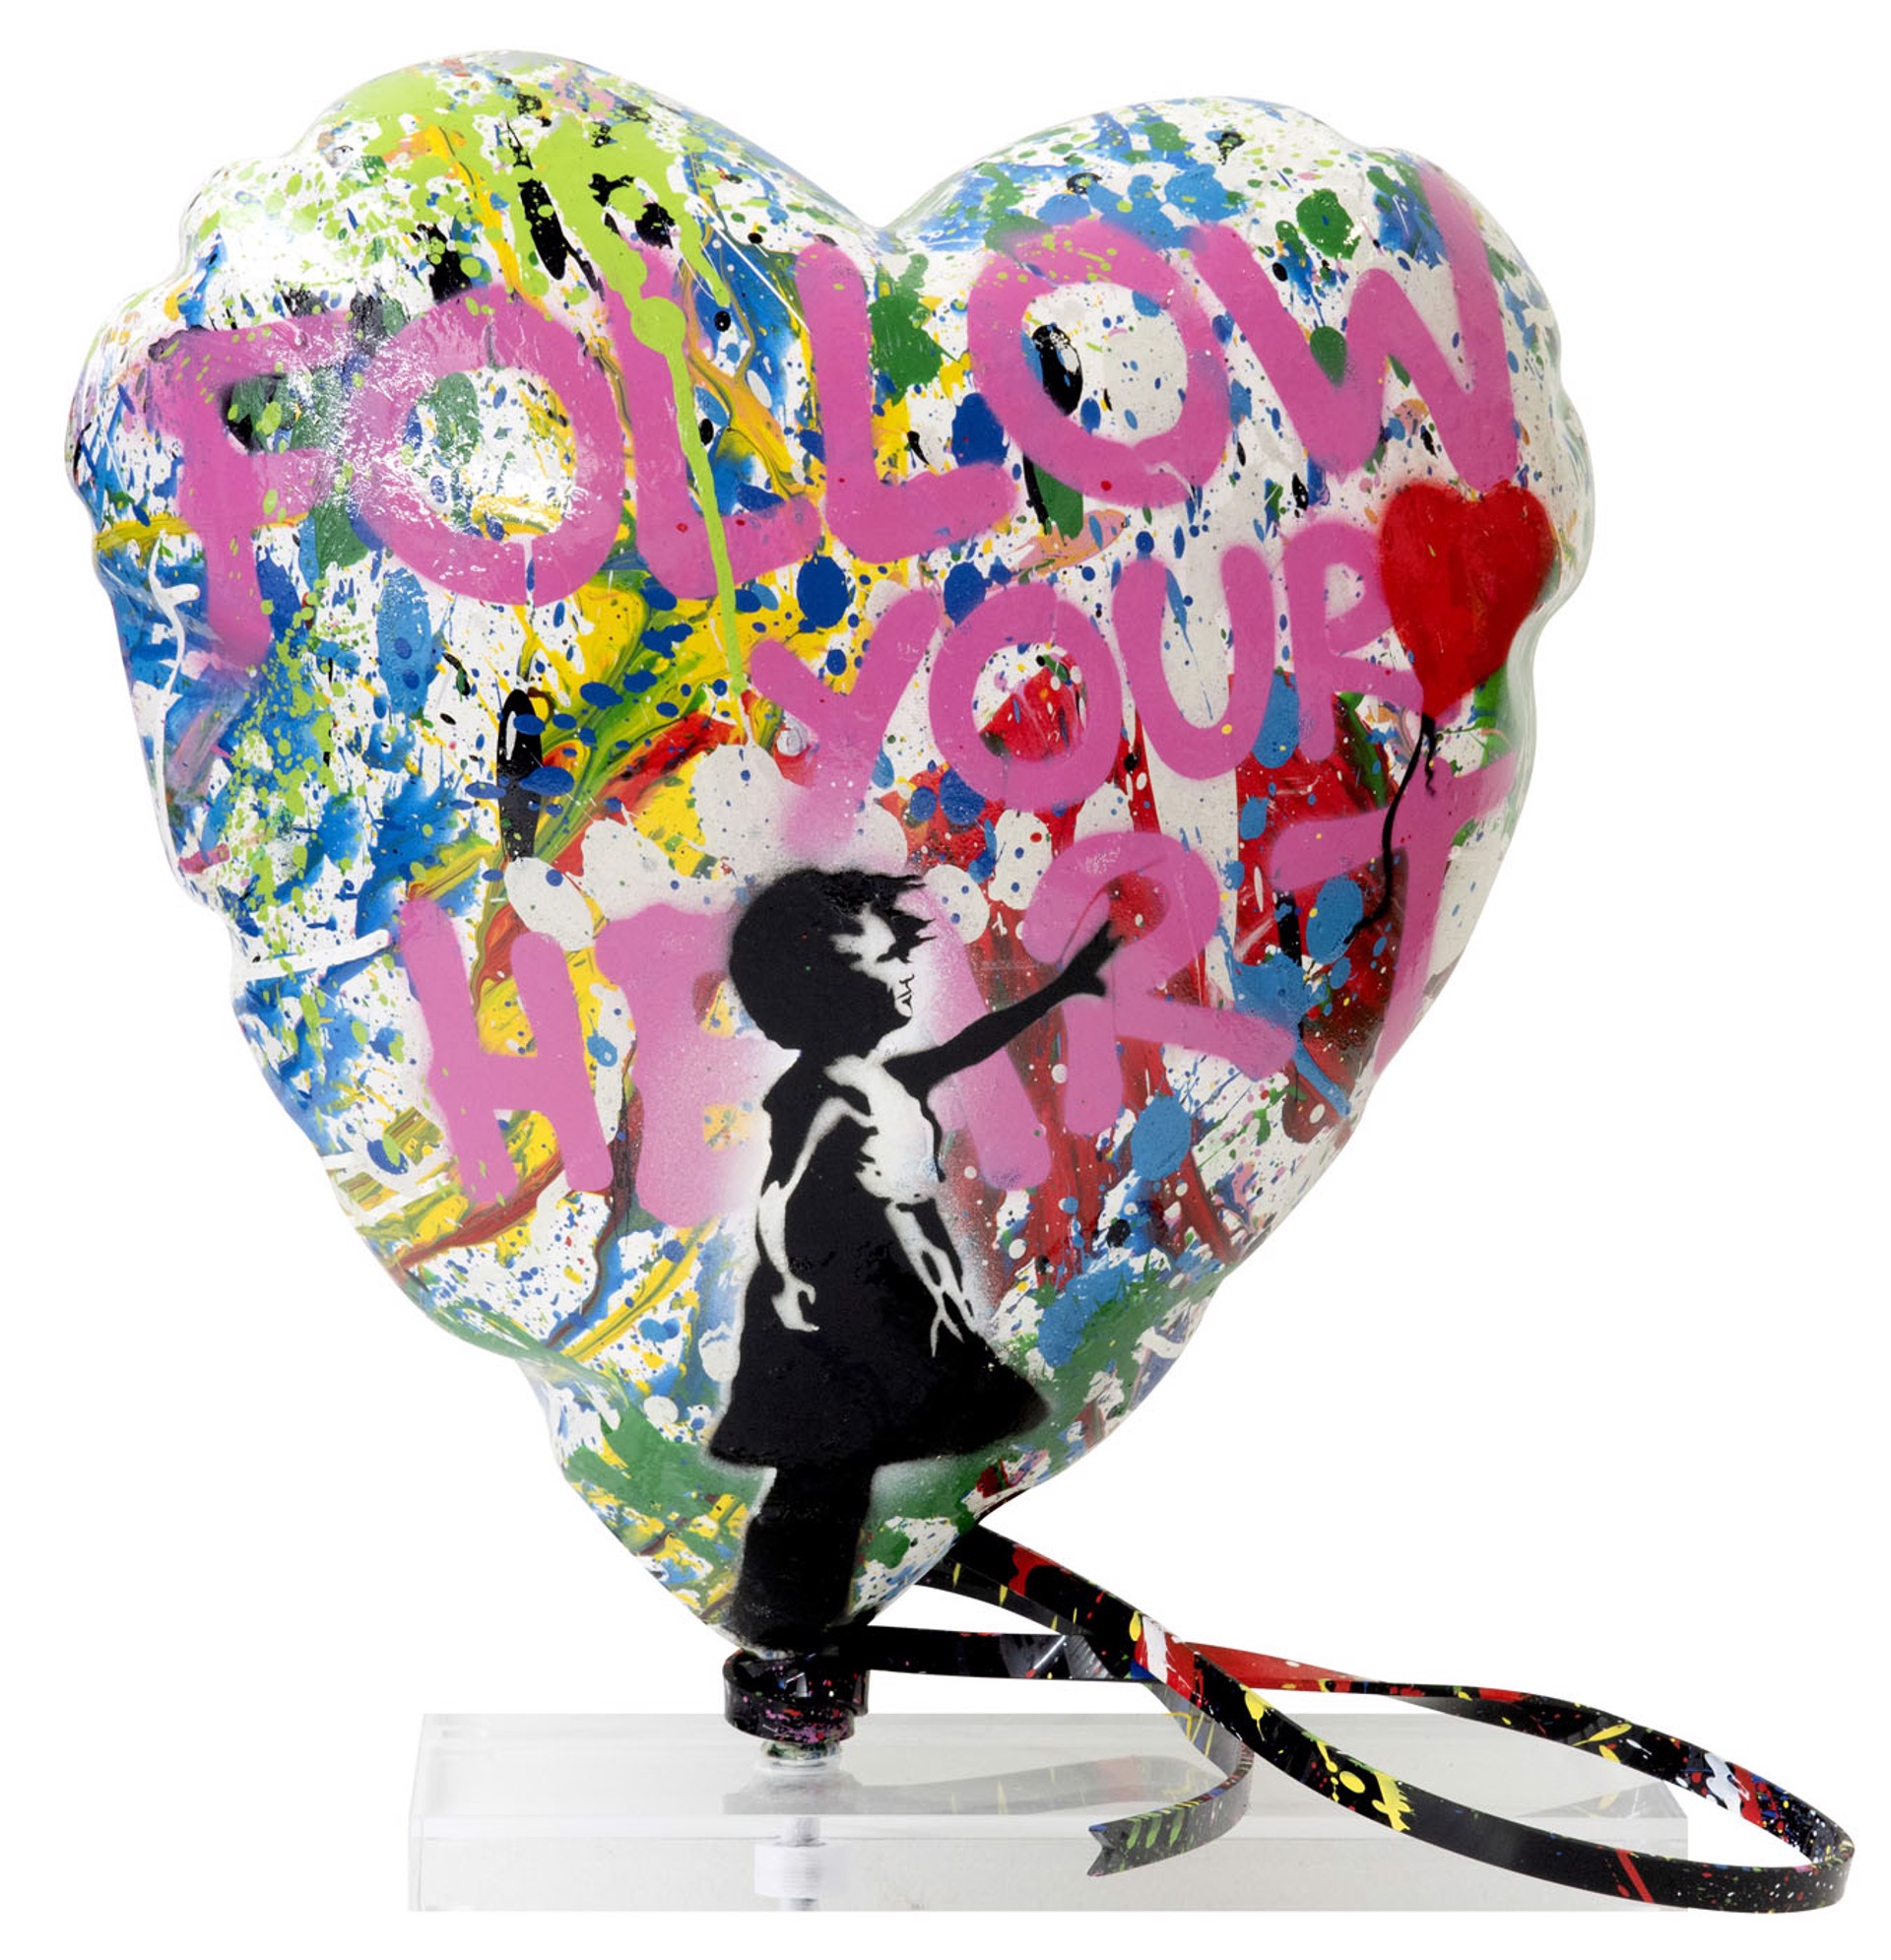 Balloon Heart 2 by Mr Brainwash